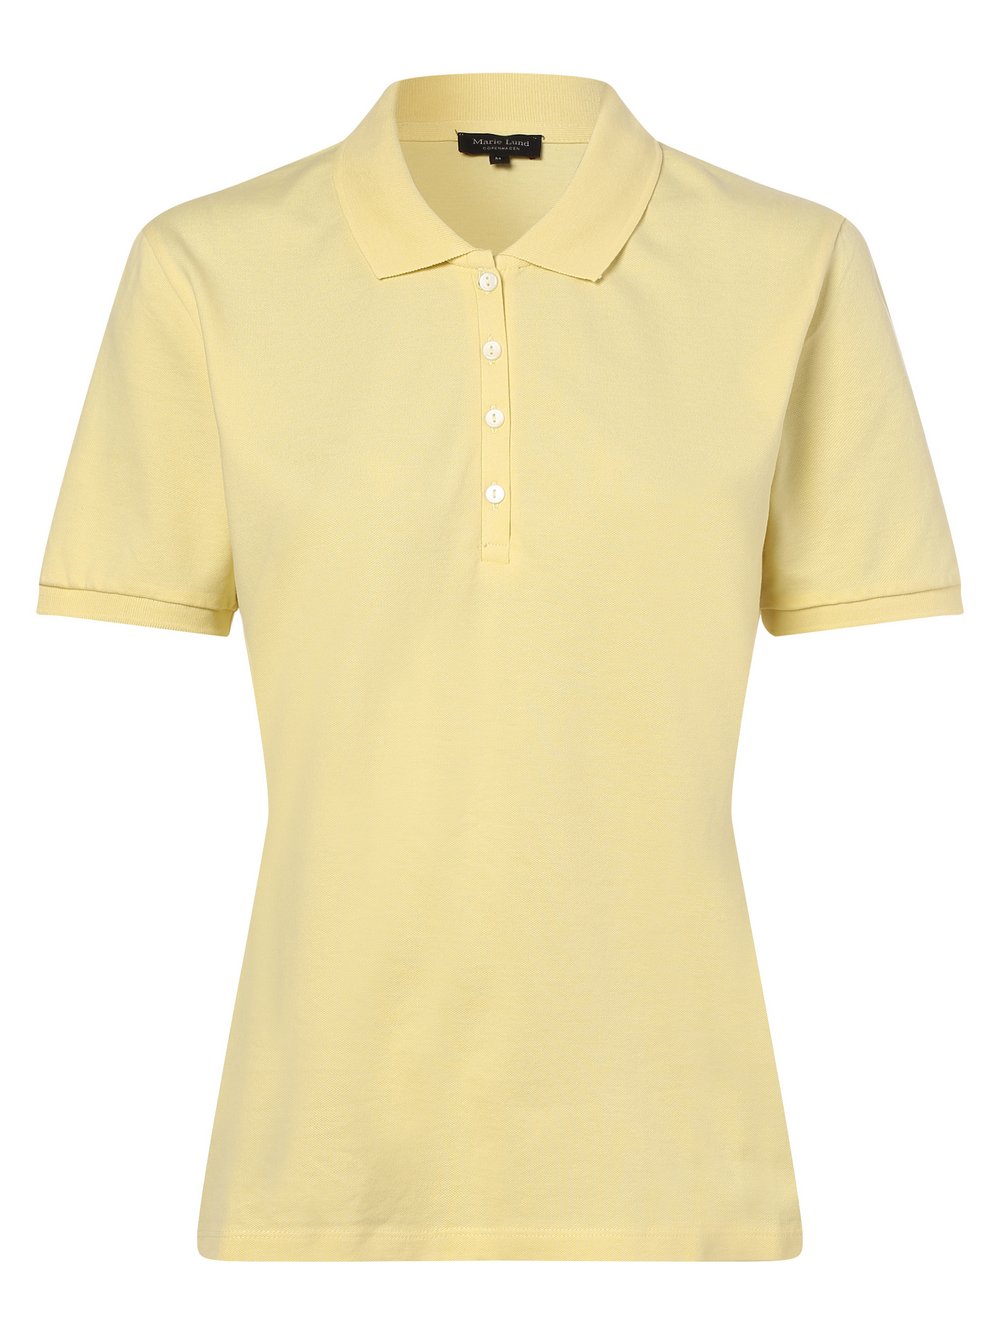 Marie Lund - Damska koszulka polo, żółty